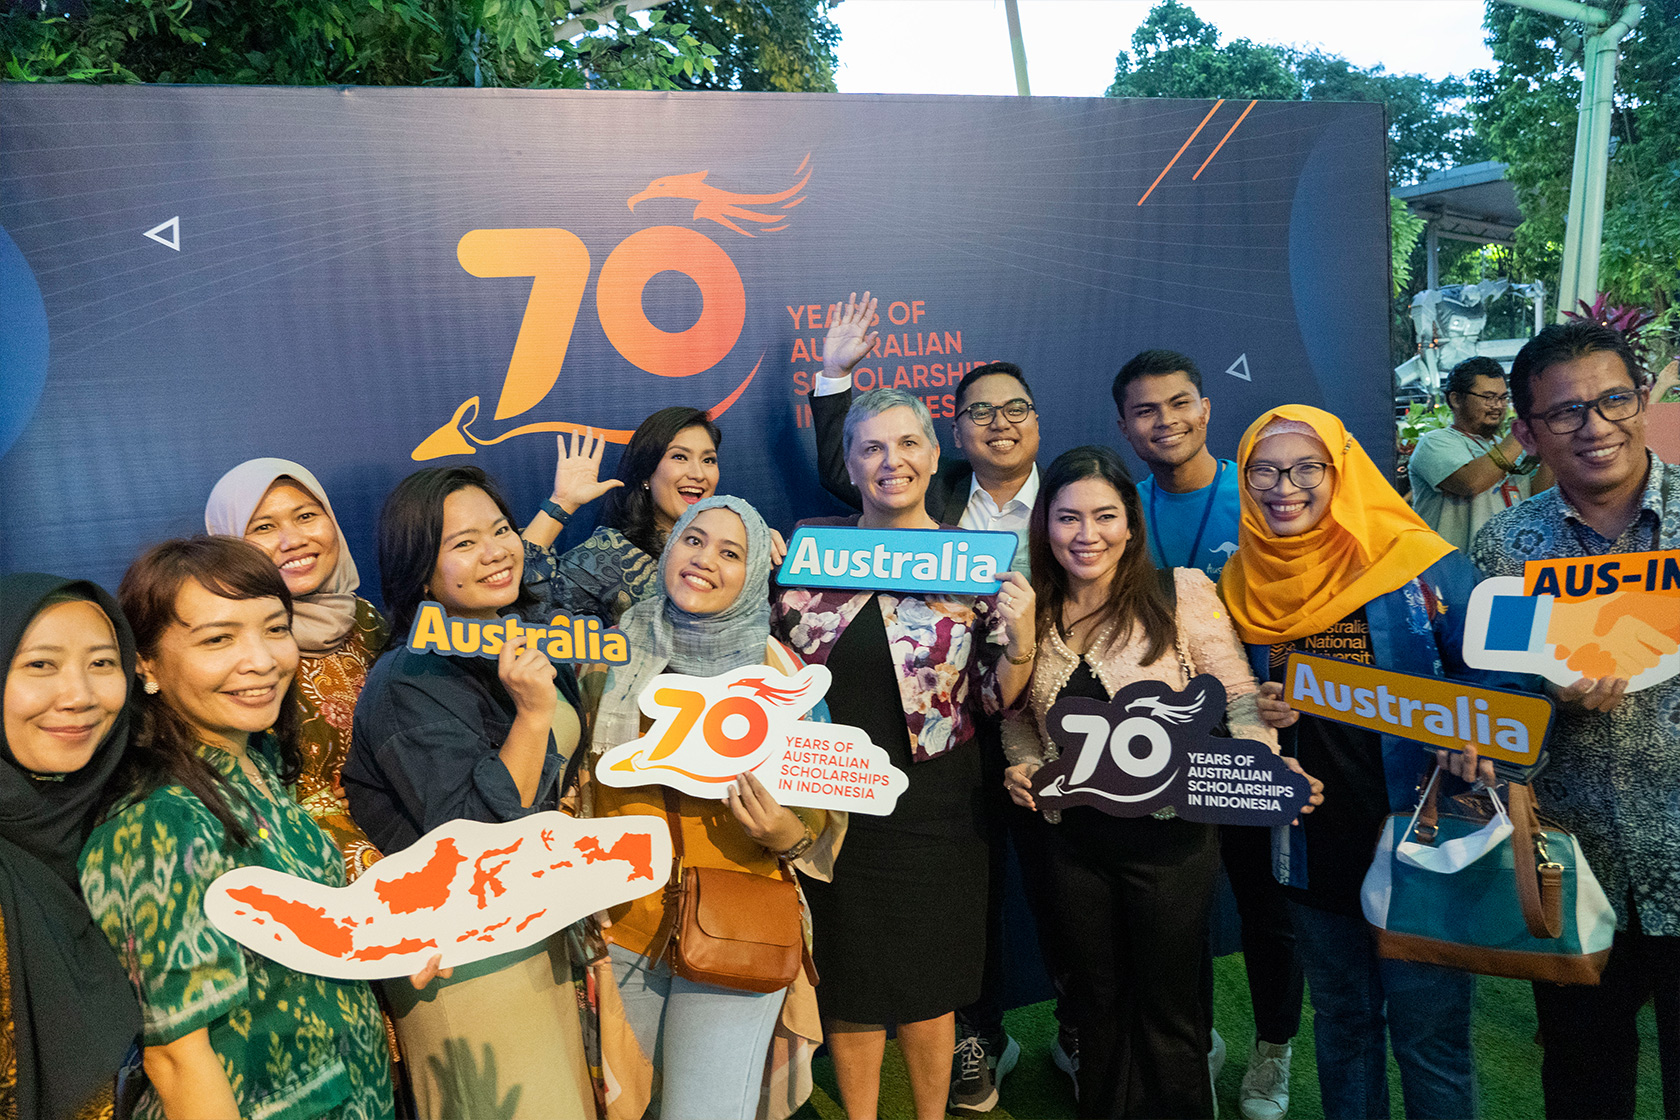 Alumni took a photo with the Australian Ambassador to Indonesia at the Photo Corner.